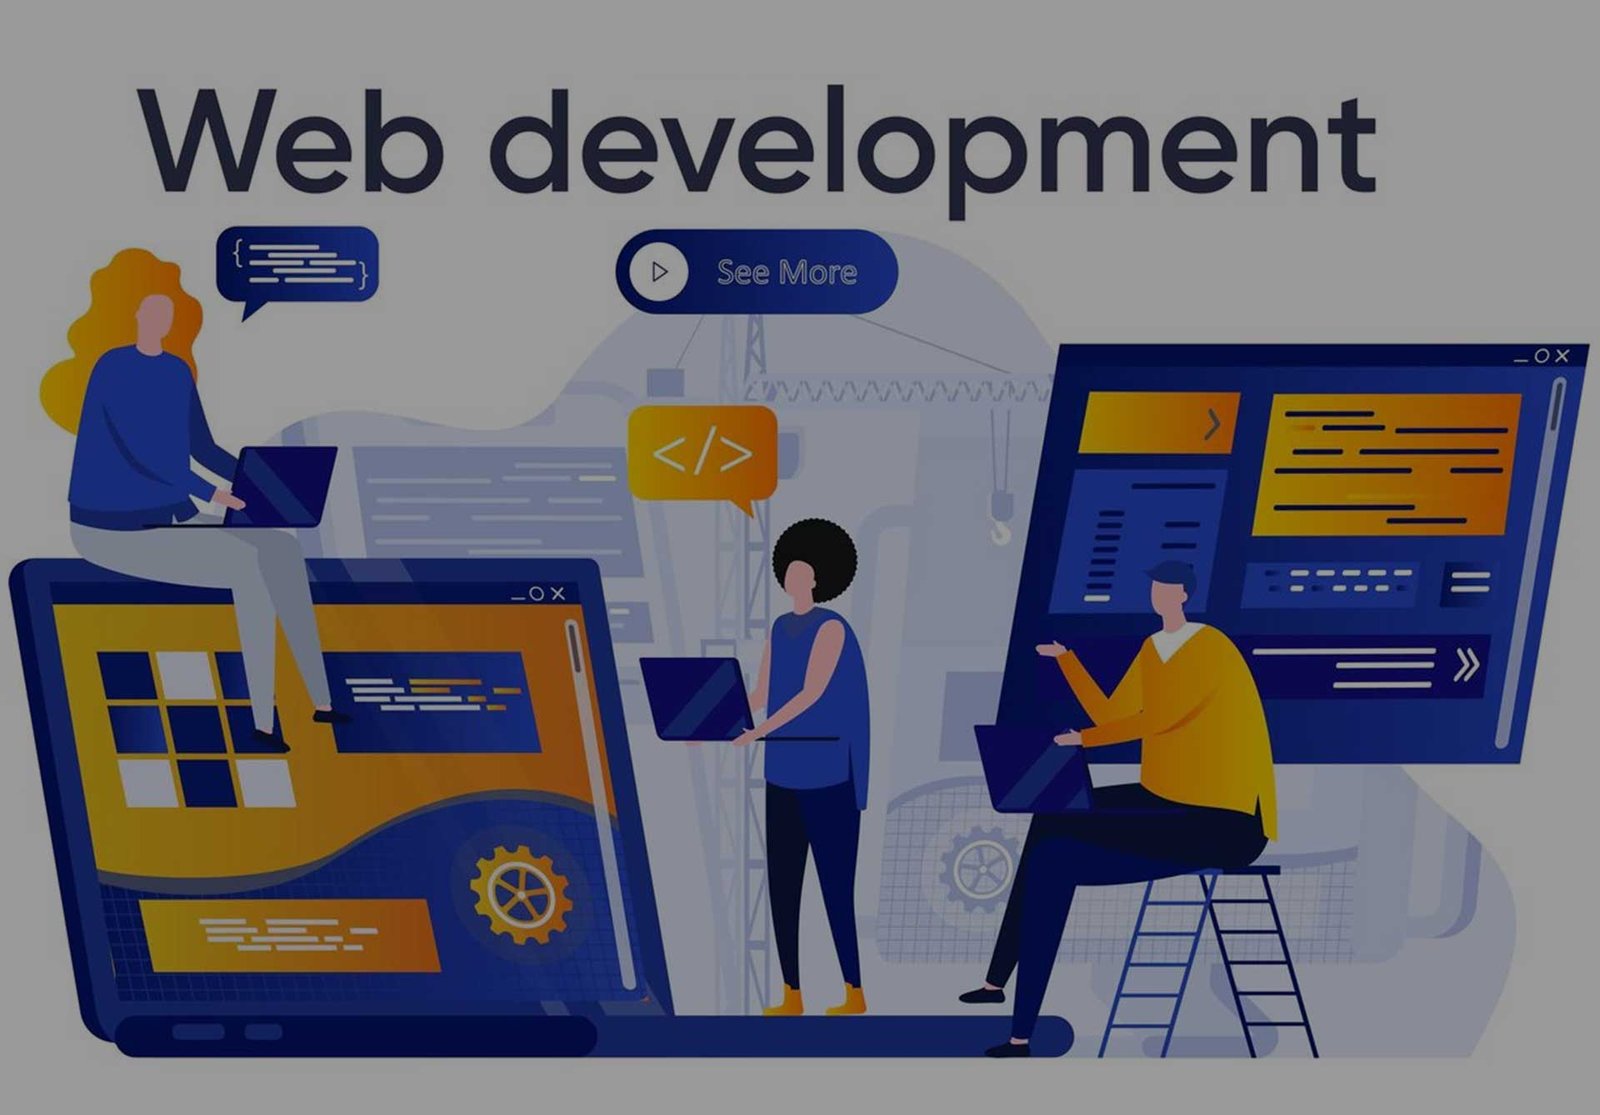 <a href="https://numerogen.com/web-development-company-uk/">Best Web Development Company UK</a>